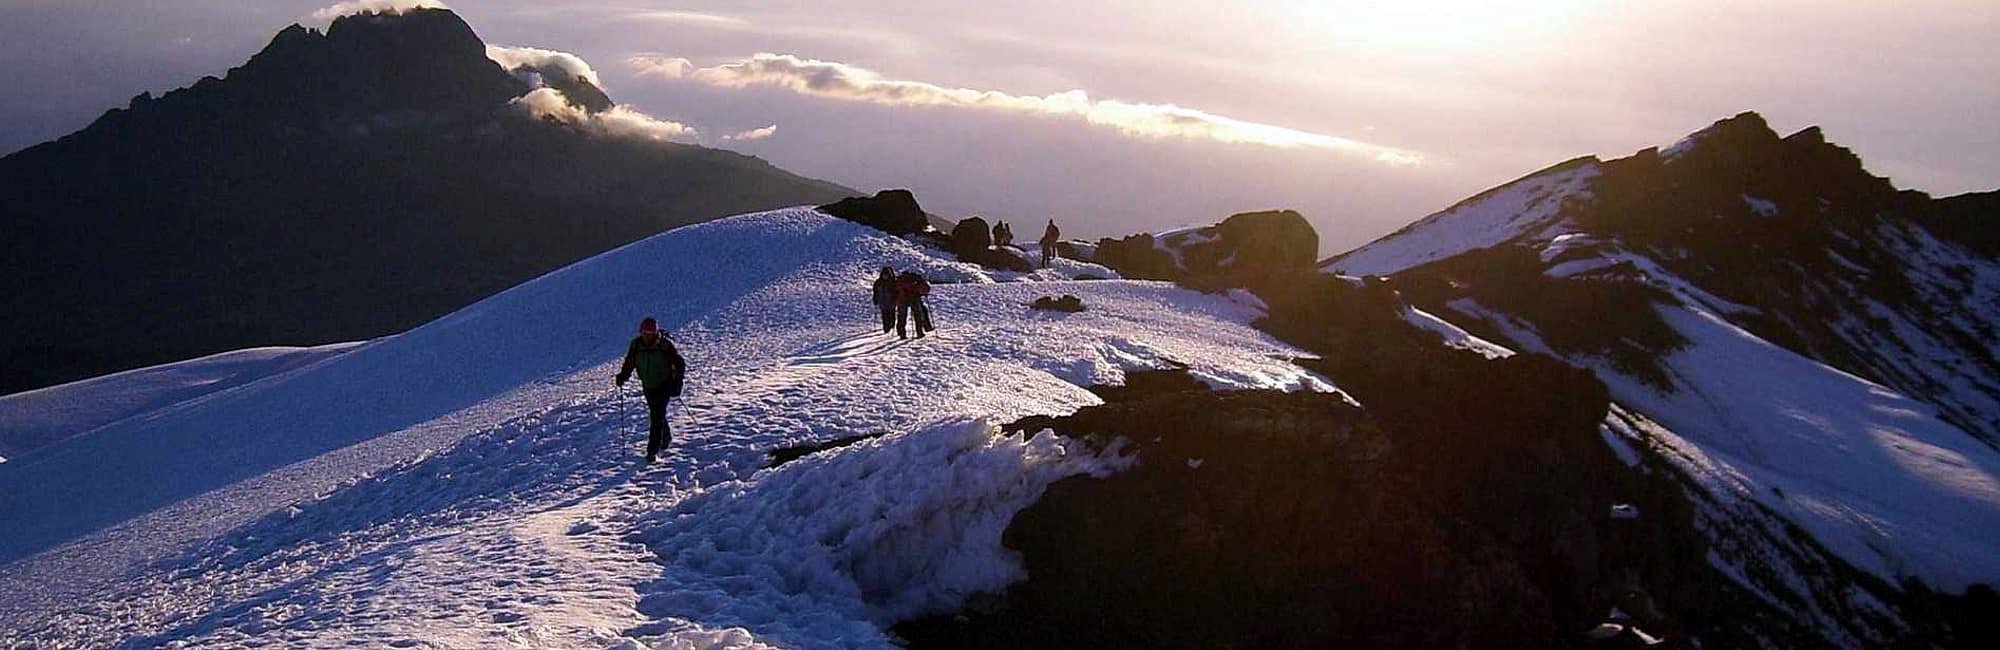 Mount Kilimanjaro Shira Route, 7-Day Shira Route Kilimanjaro